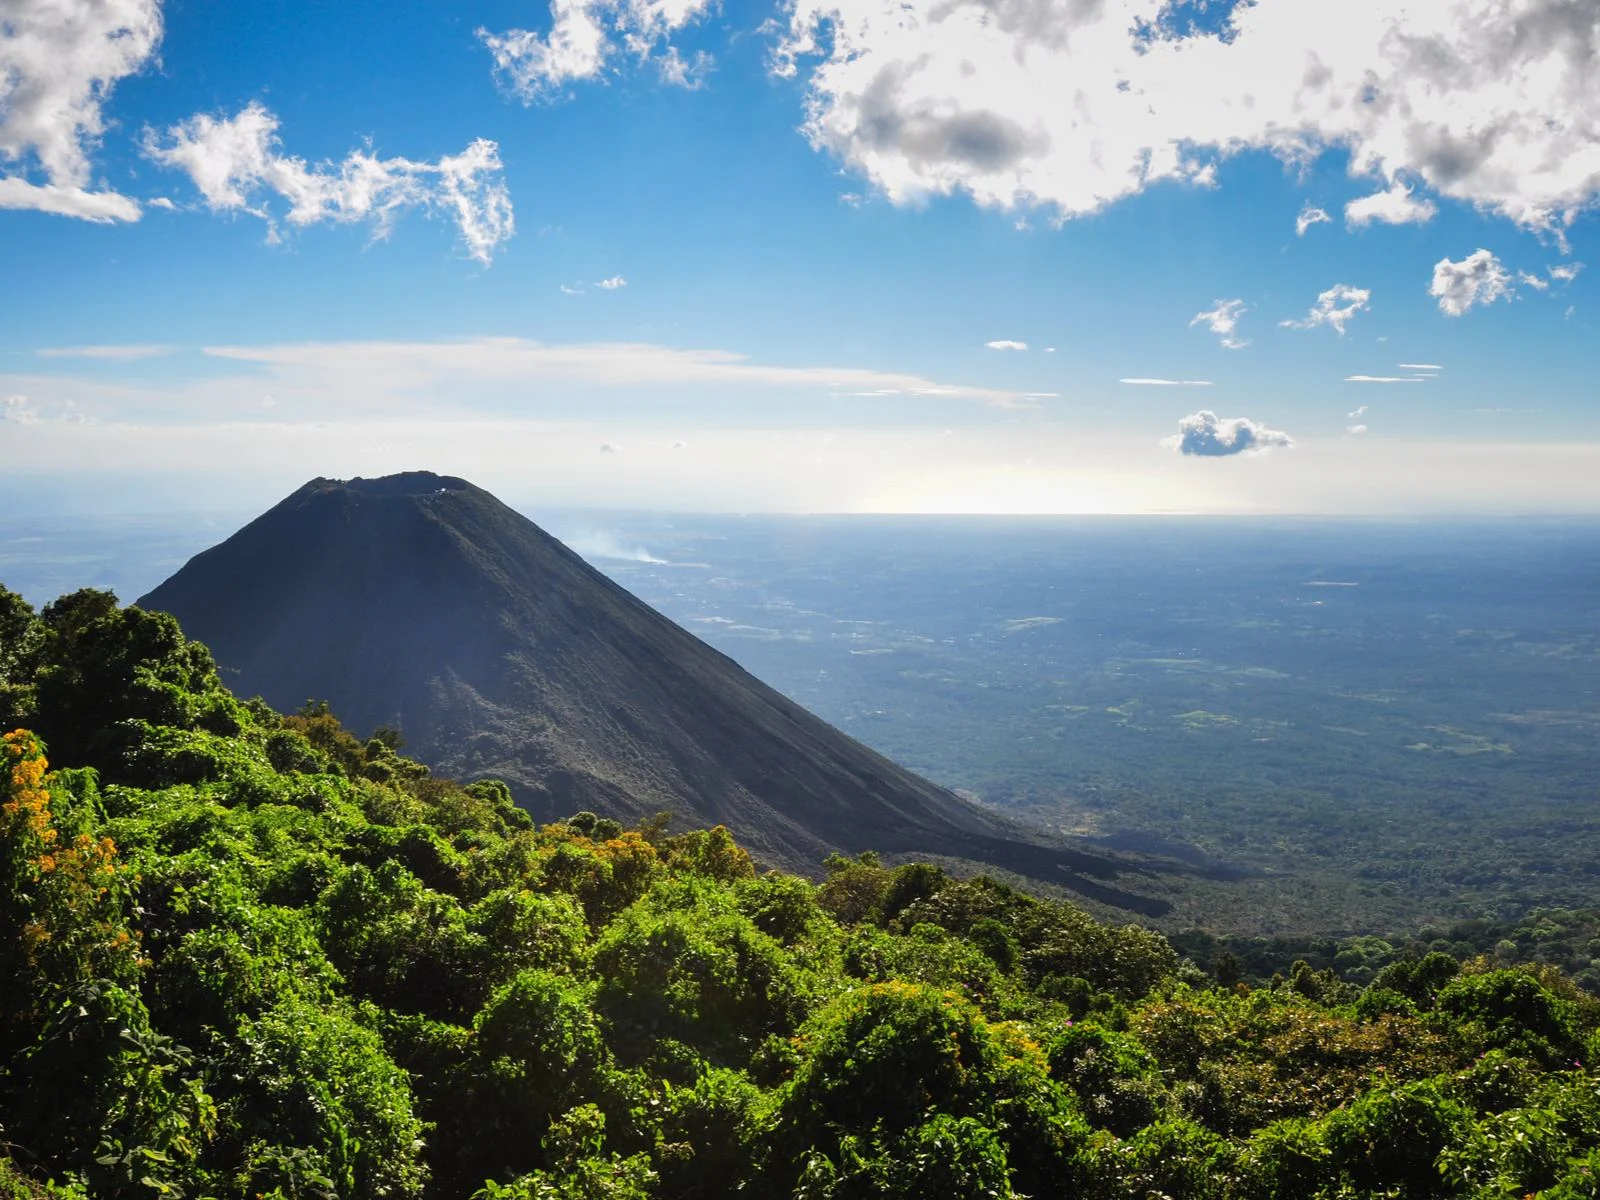 For a post titled Is El Salvador Safe, Izalco Volcano from Cerro Verde National Park